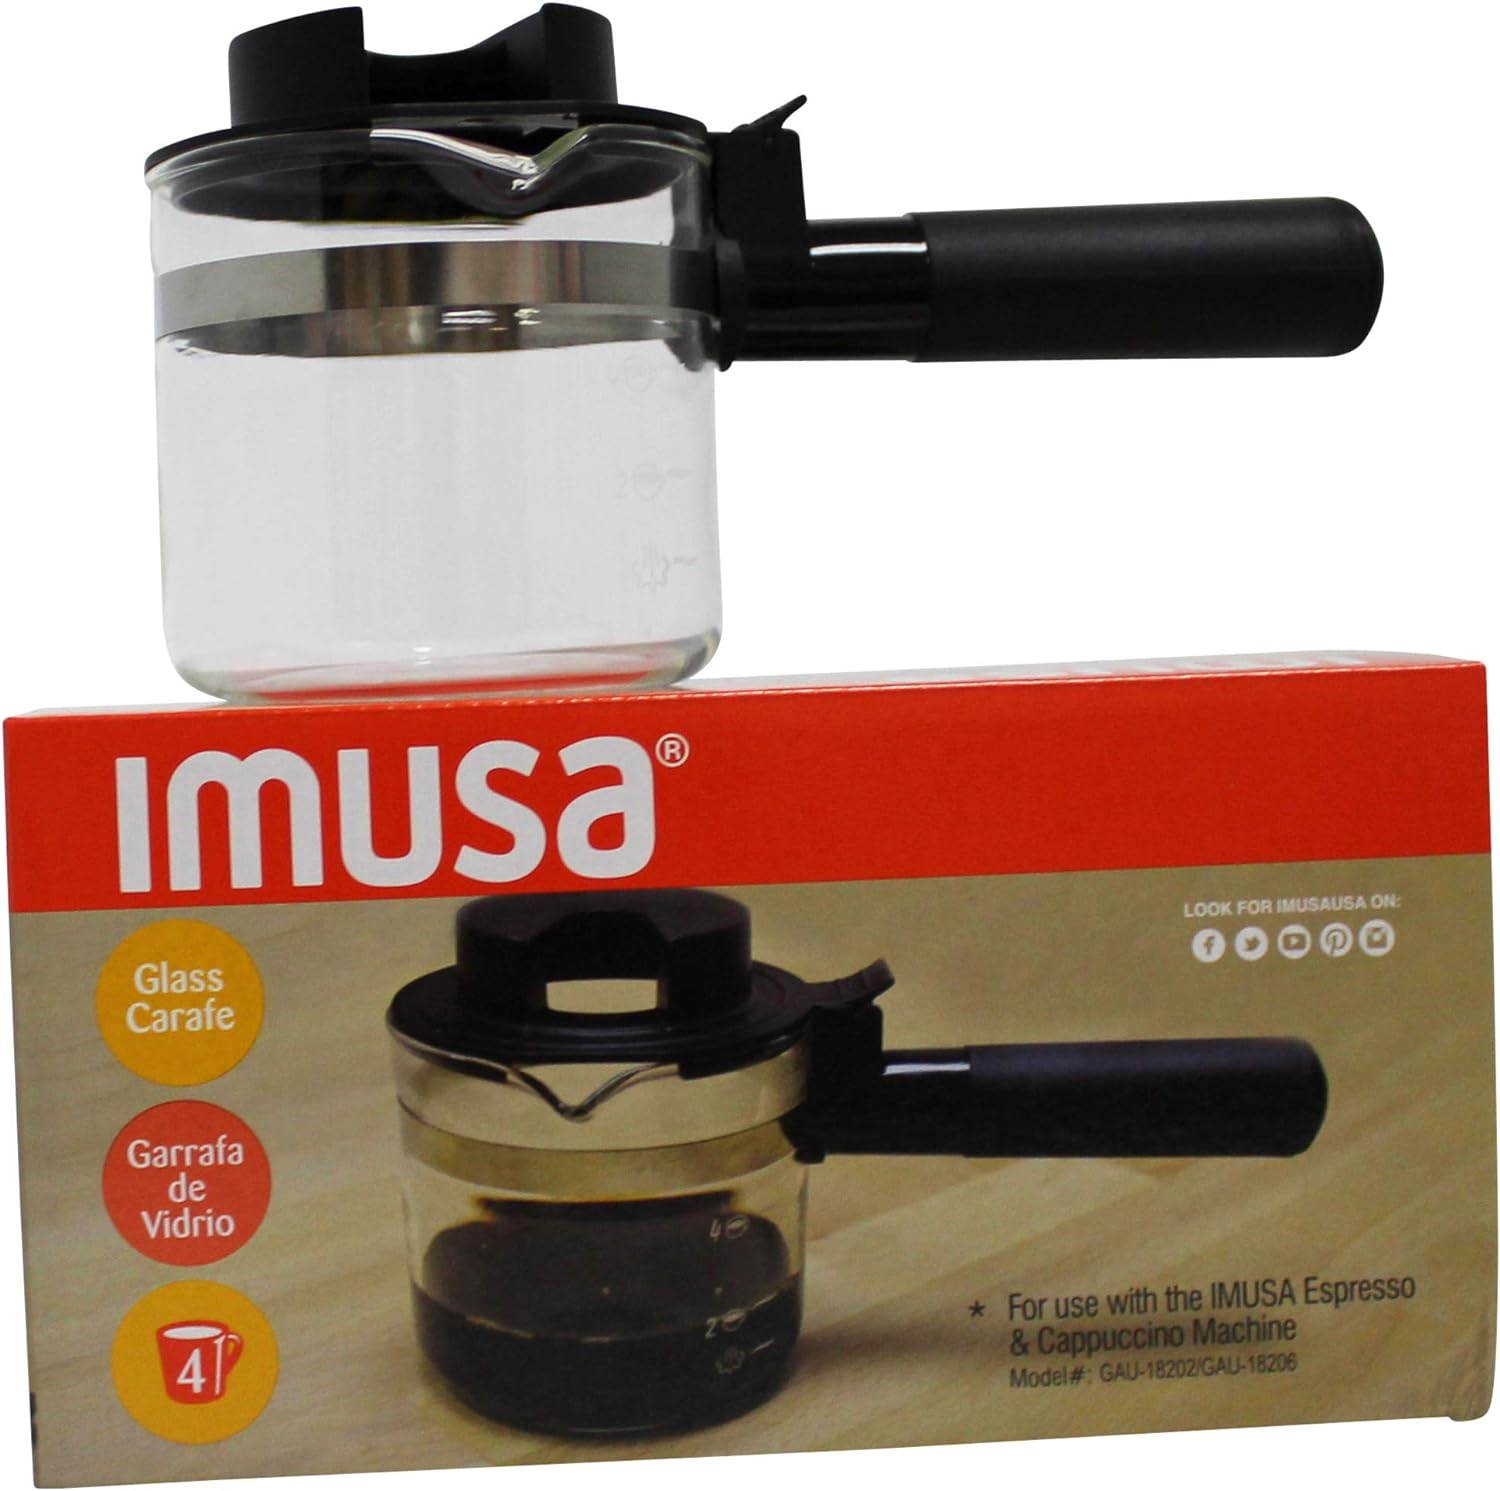 IMUSA USA Espresso Maker Carafe in Gift Box, Clear 4 Cup